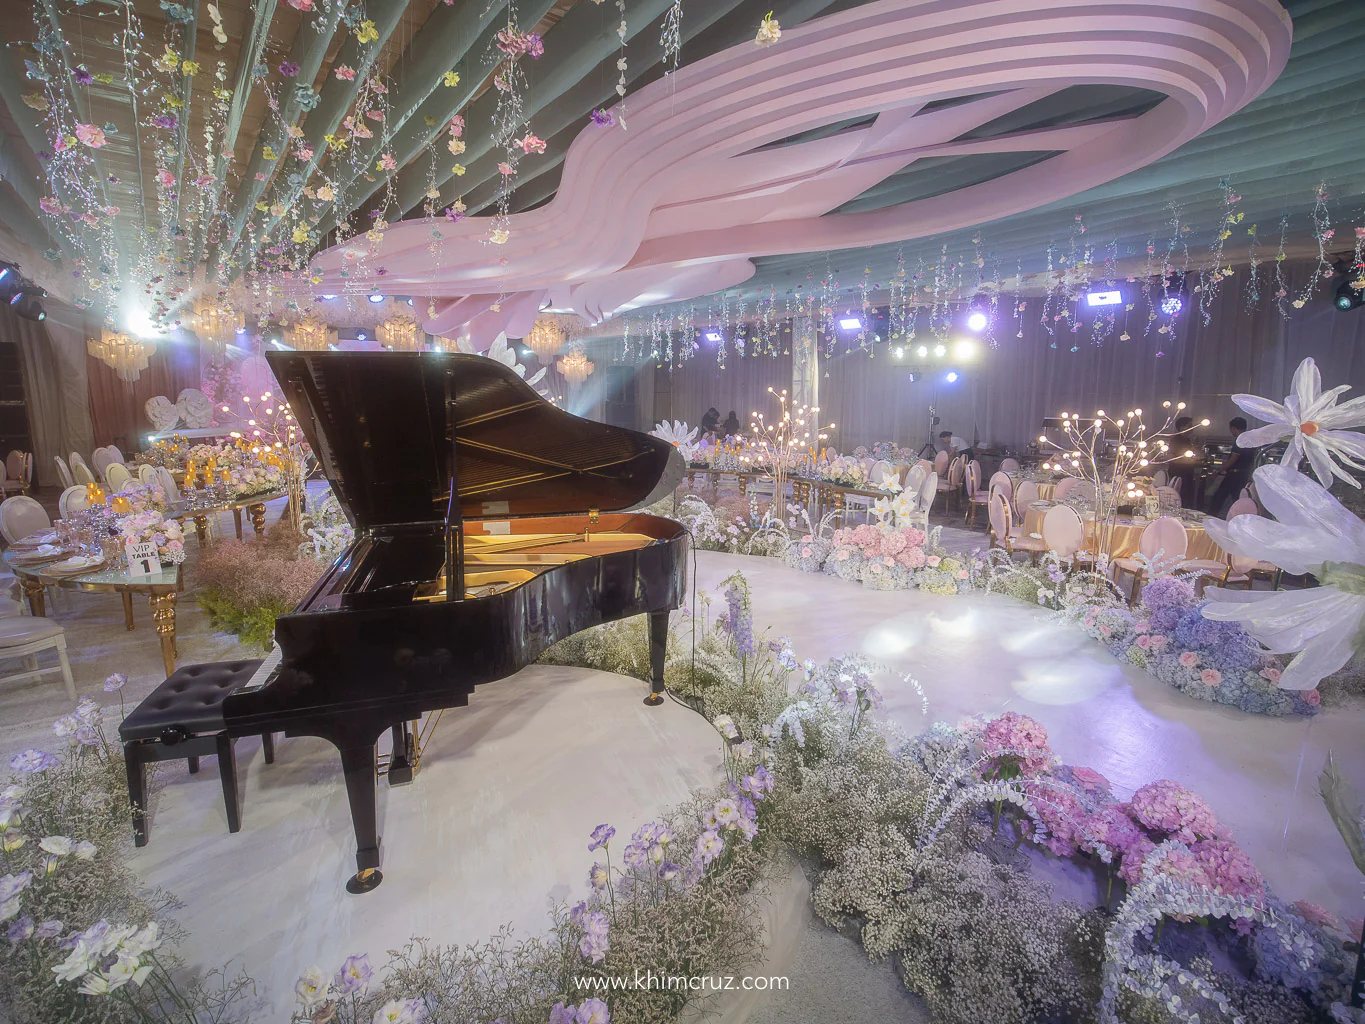 dreamy floral garden wedding reception with a grand piano